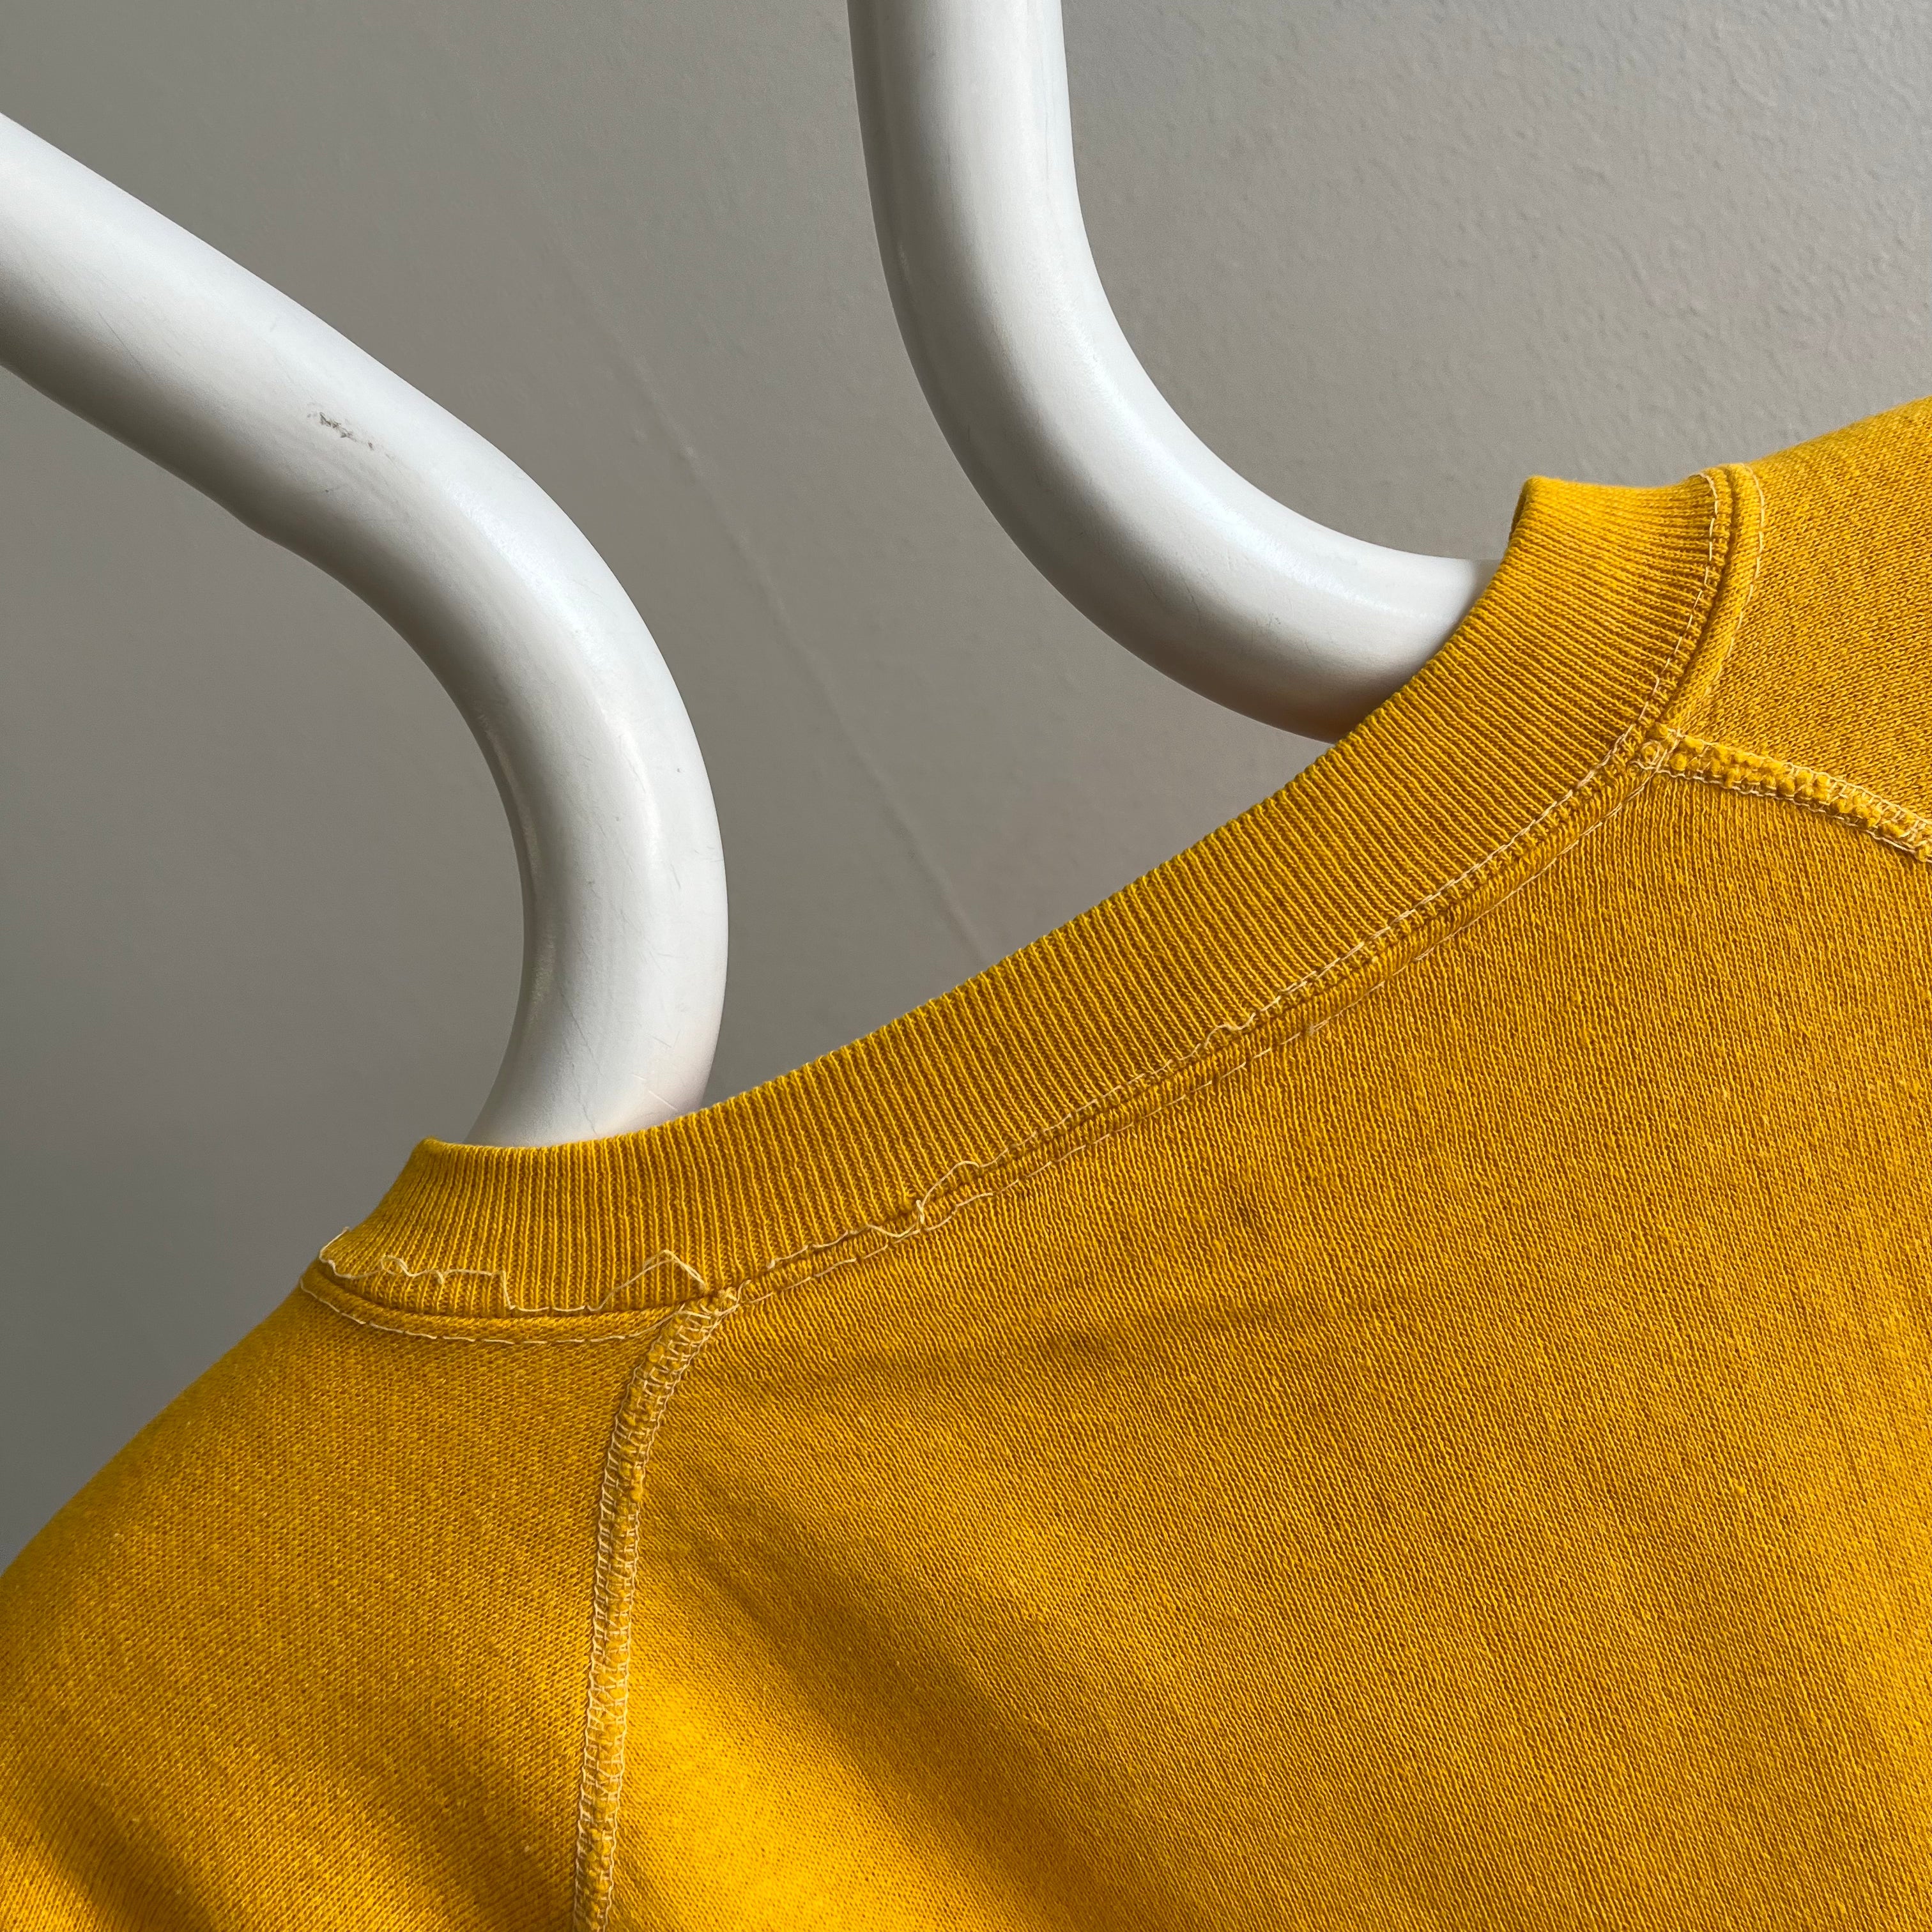 1970s Beyond Stained Marigold Yellow Sweatshirt - Dreamy